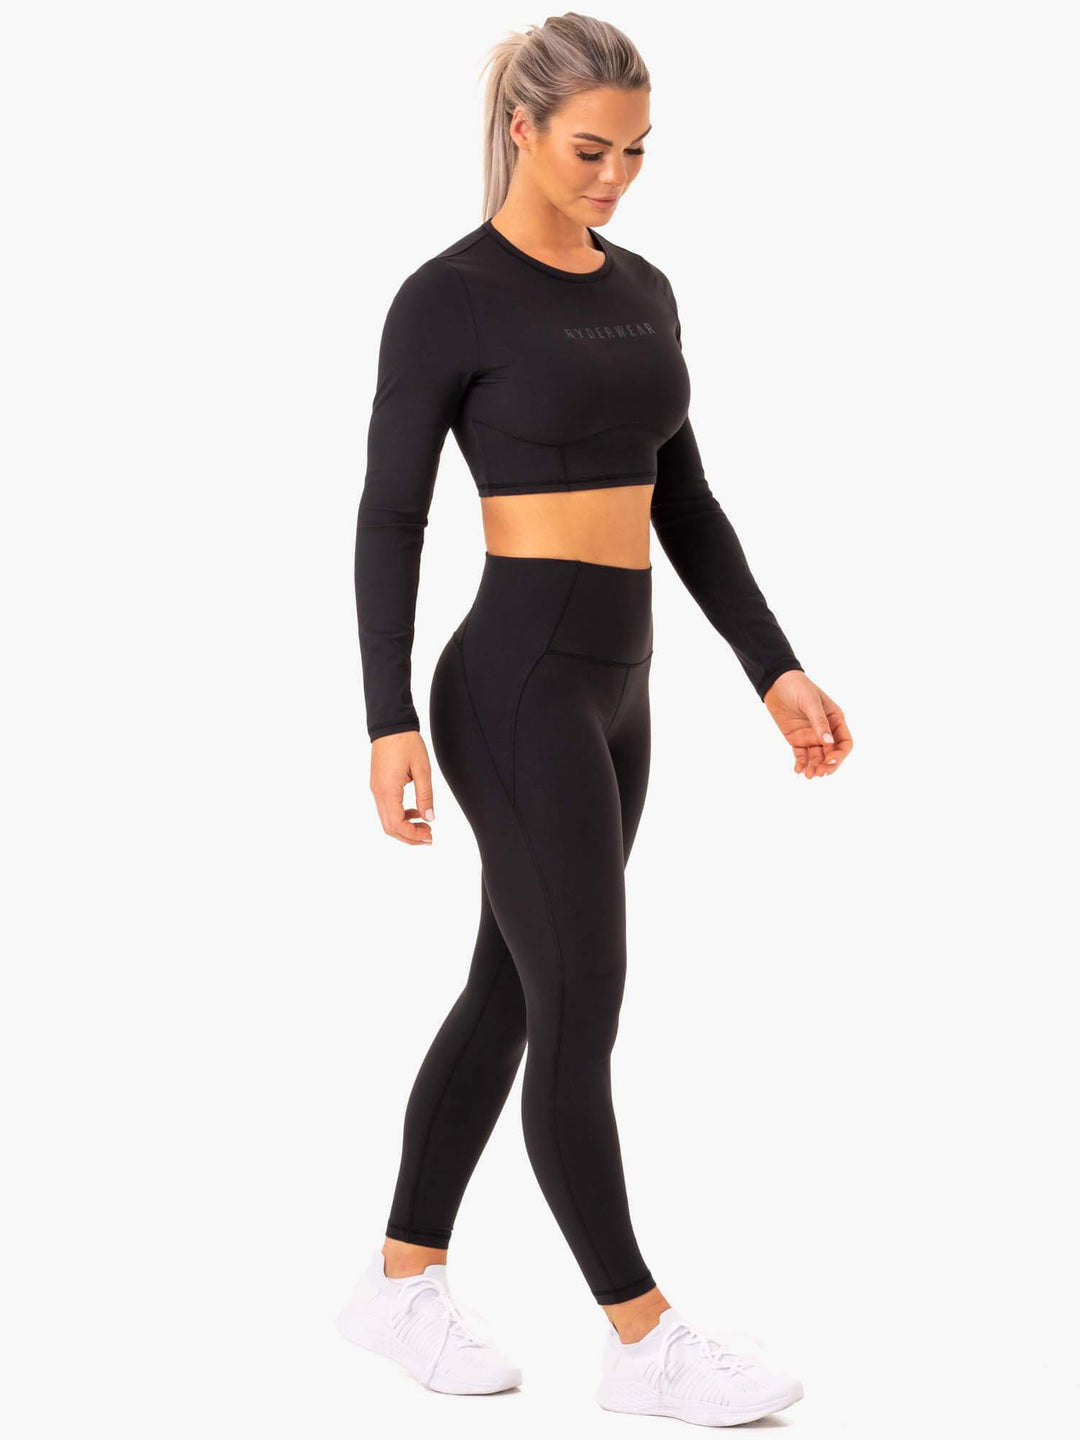 Sola Long Sleeve Top - Black Clothing Ryderwear 